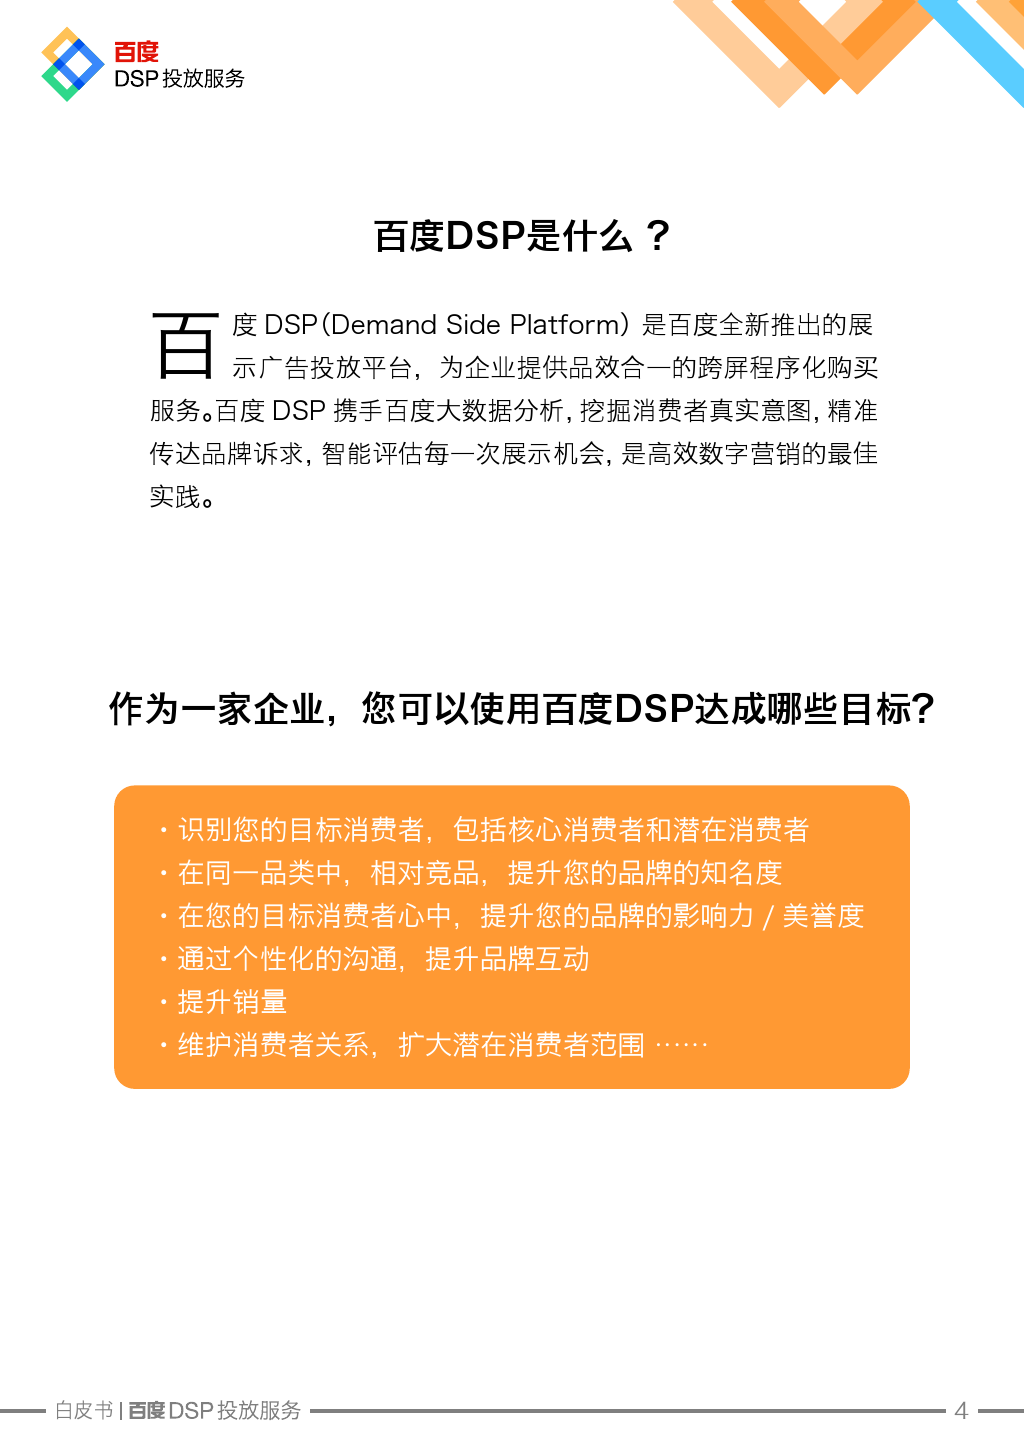 Baidu DSP Service White Paper_000005